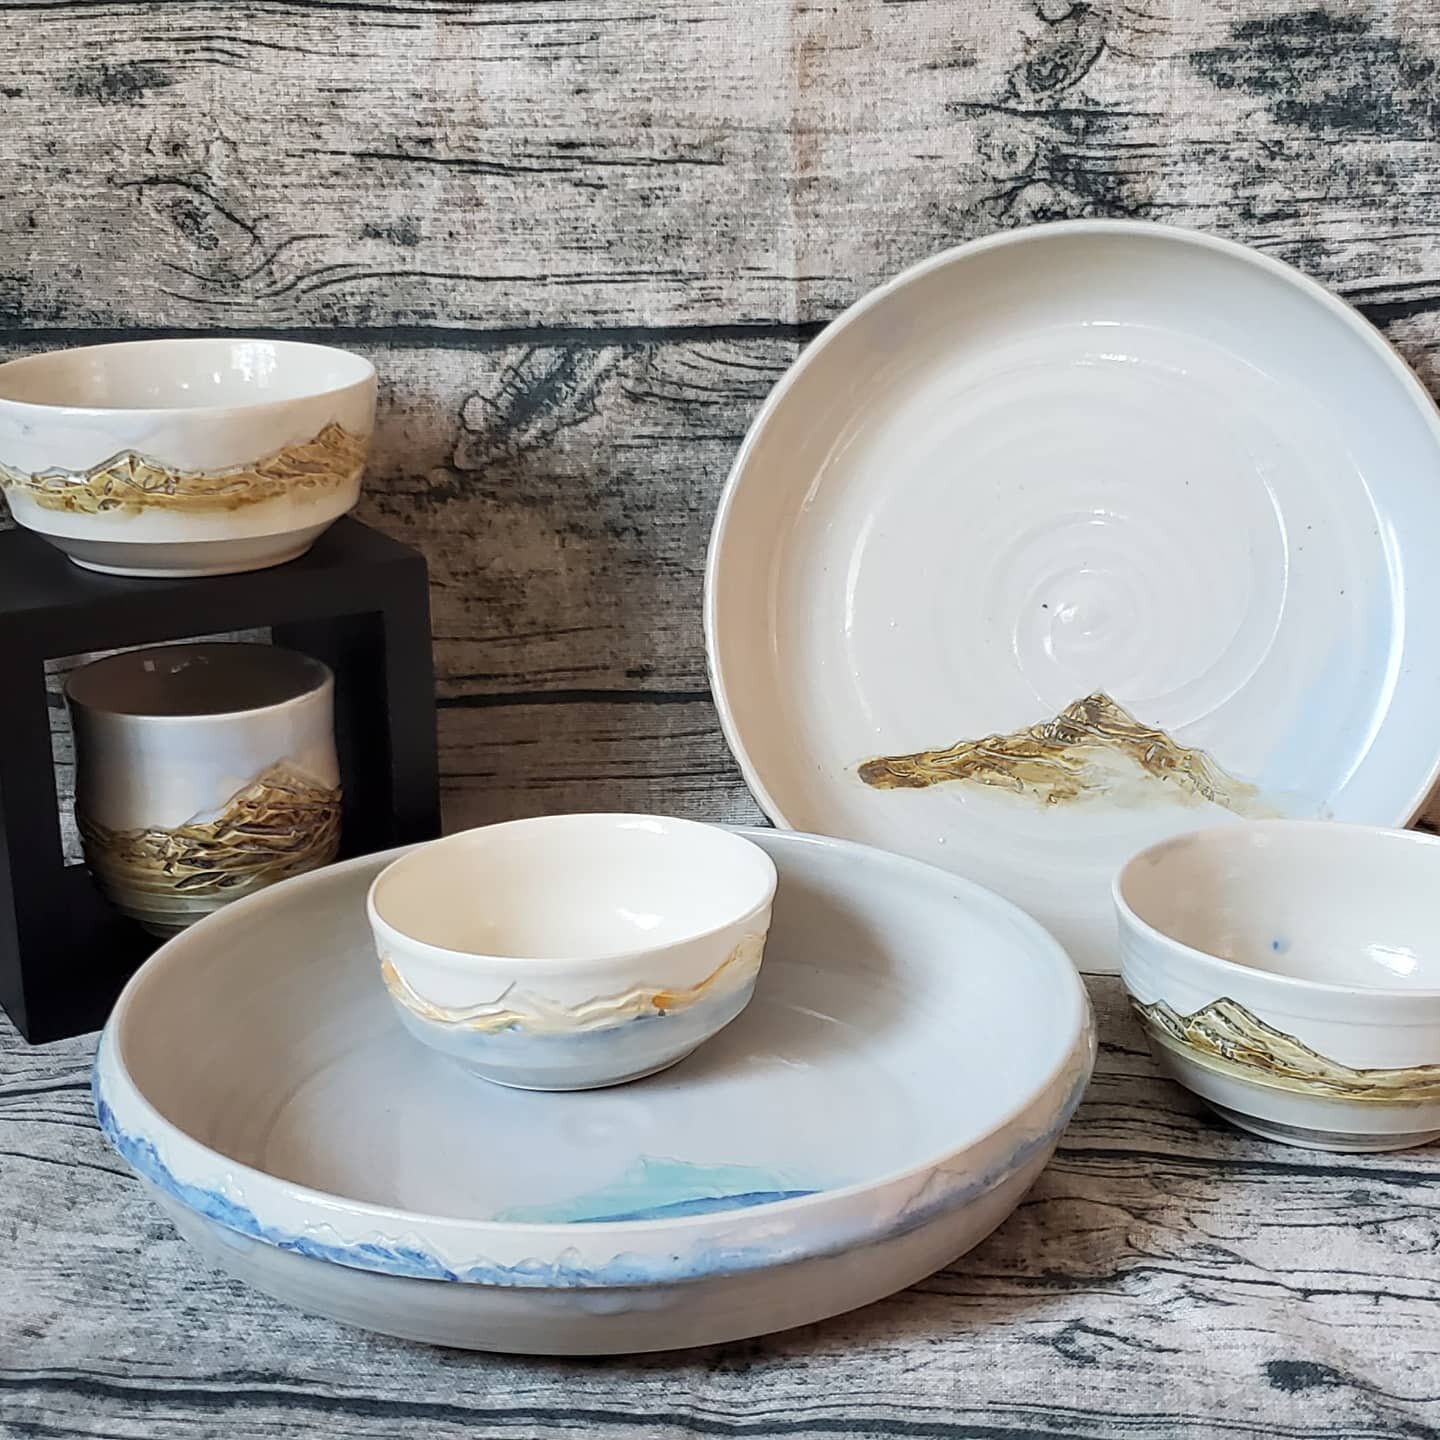 Beautiful serving plates and little bowls for nuts and sauces 

#madewithlove #ciarajayneceramics #ciarajayne #craft #mountains #mybanff #madeinBanff #mountainmug #pottery #potteryofinstagram #ceramics #ceramicsofinstagram #plainsmanclay #m370 #handm